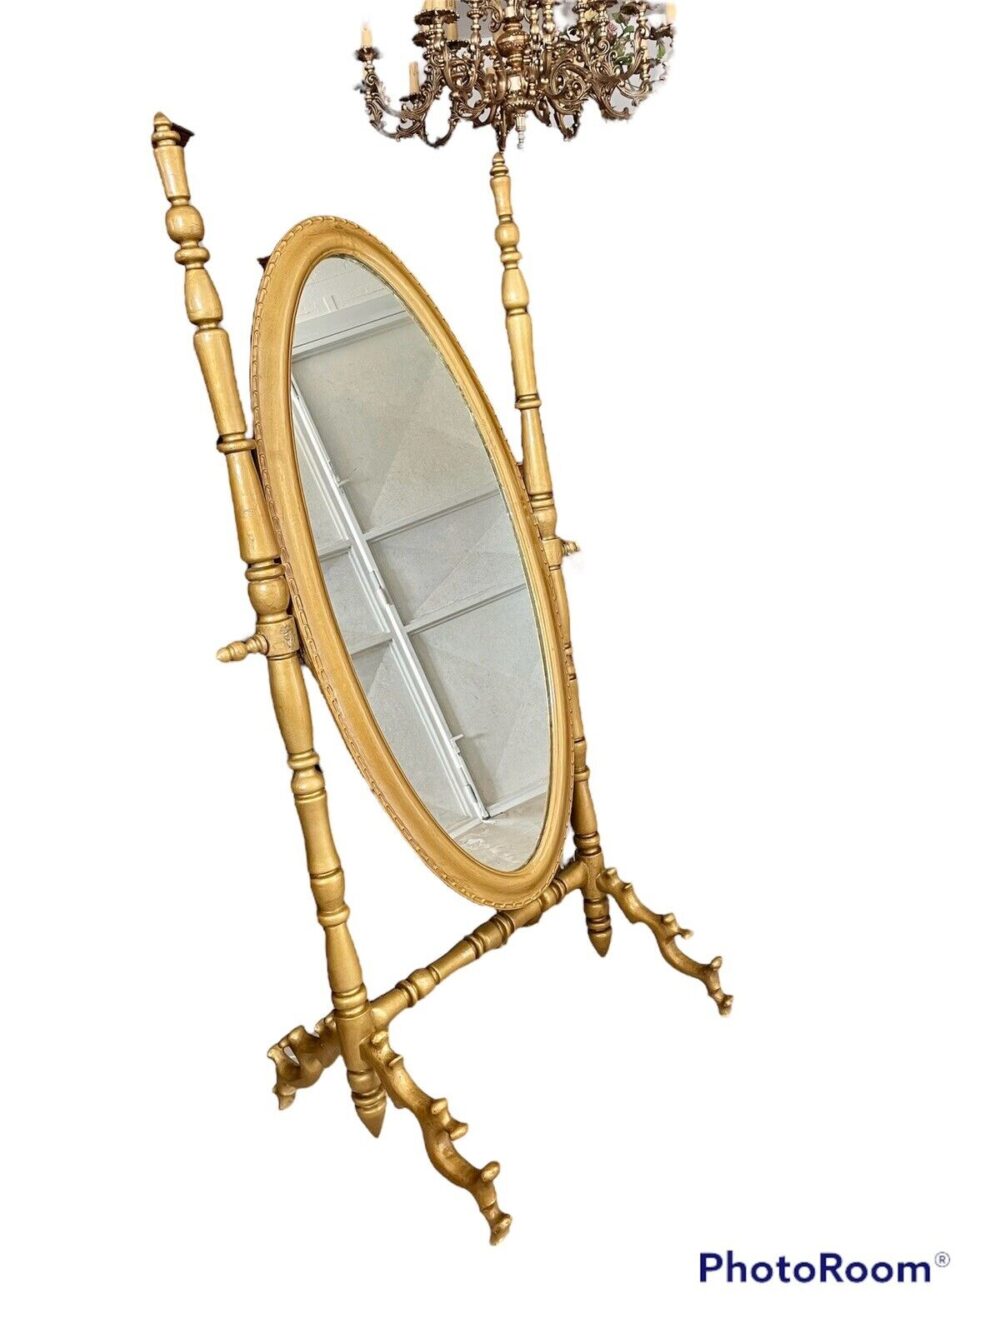 Grande Spiegel Schwenkbare Spiegel IN Holz Golden Early '900 - Italien Rarität Spiegel LUXONAR.com Grande Spiegel Schwenkbare Spiegel IN Holz Golden Early '900 - Italien Rarität Wien Österreich Online Kaufen